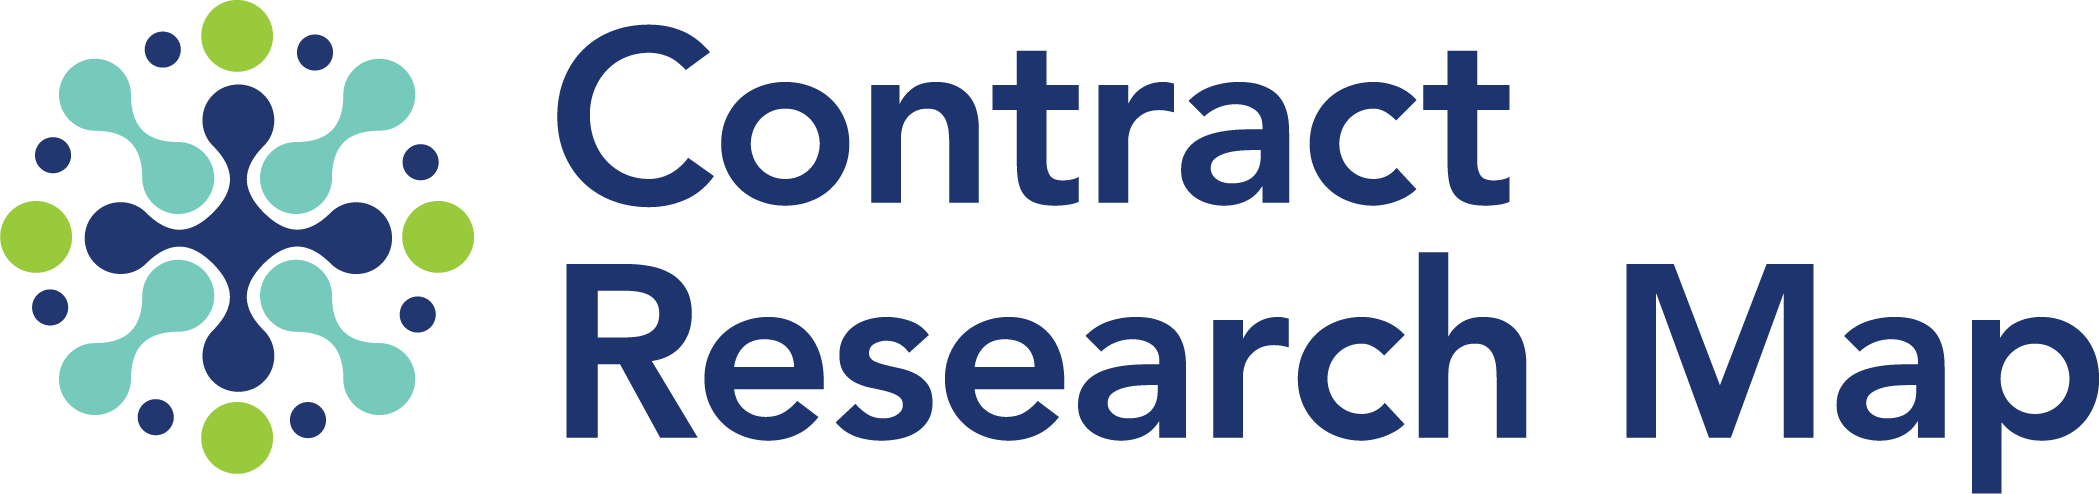 clinical research companies austria